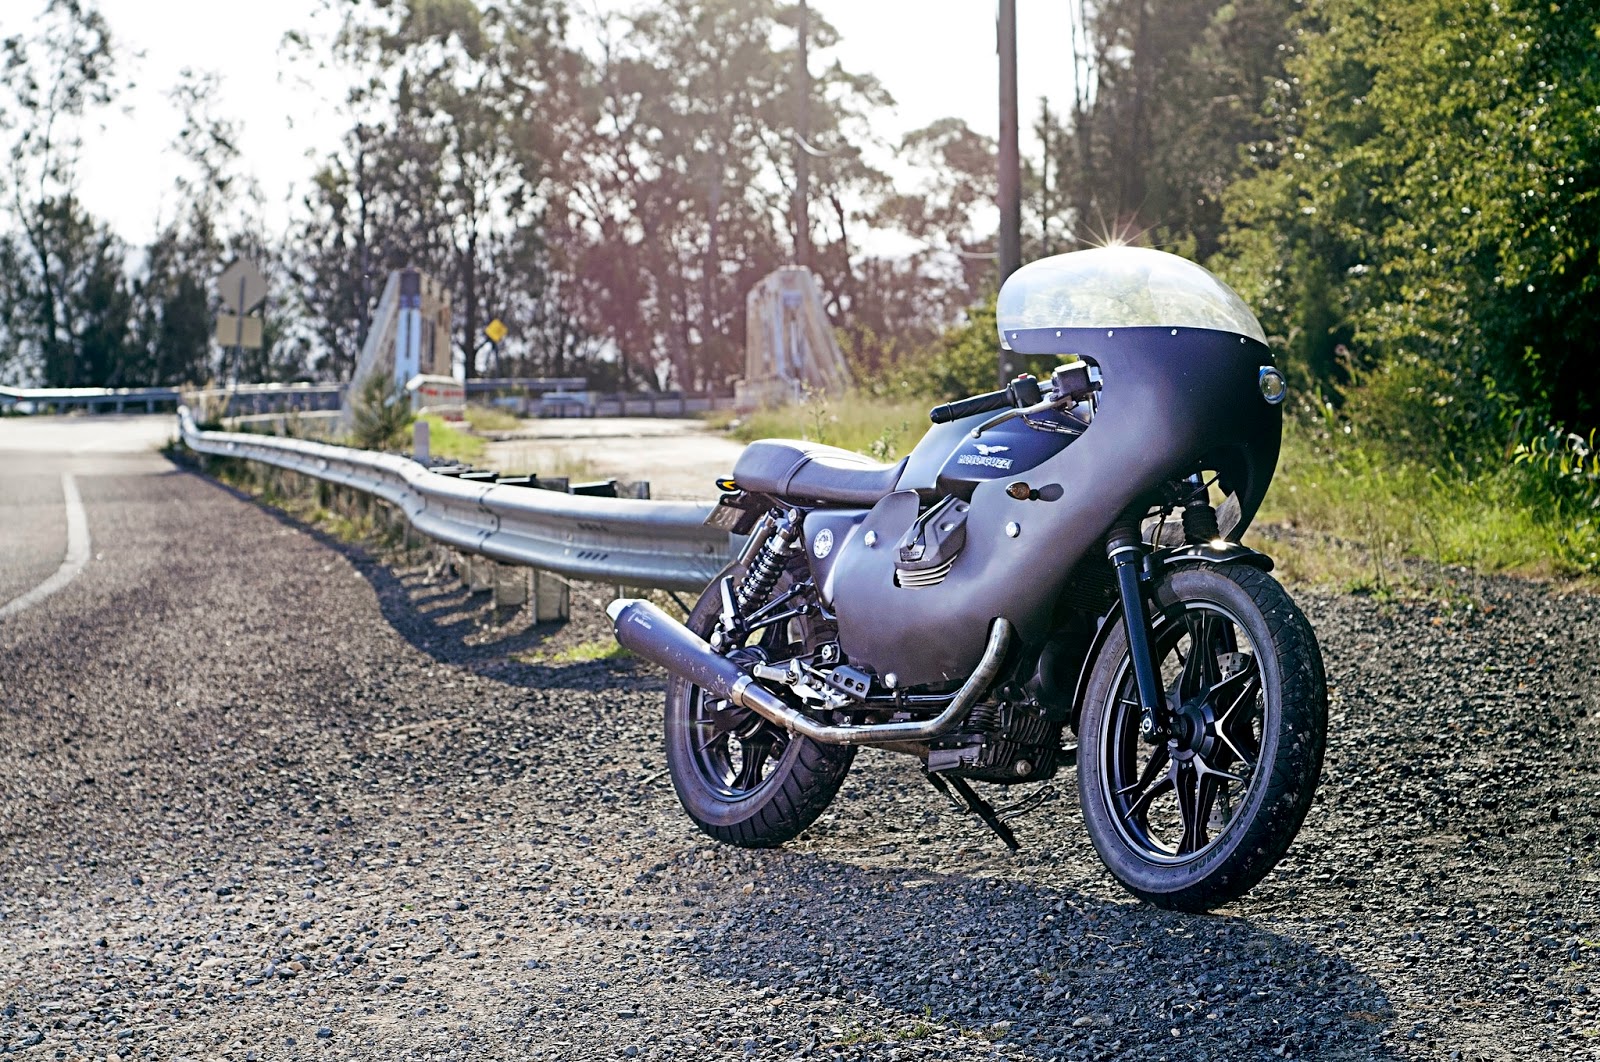 Brad's Moto Guzzi V7 | Return of the Cafe Racers